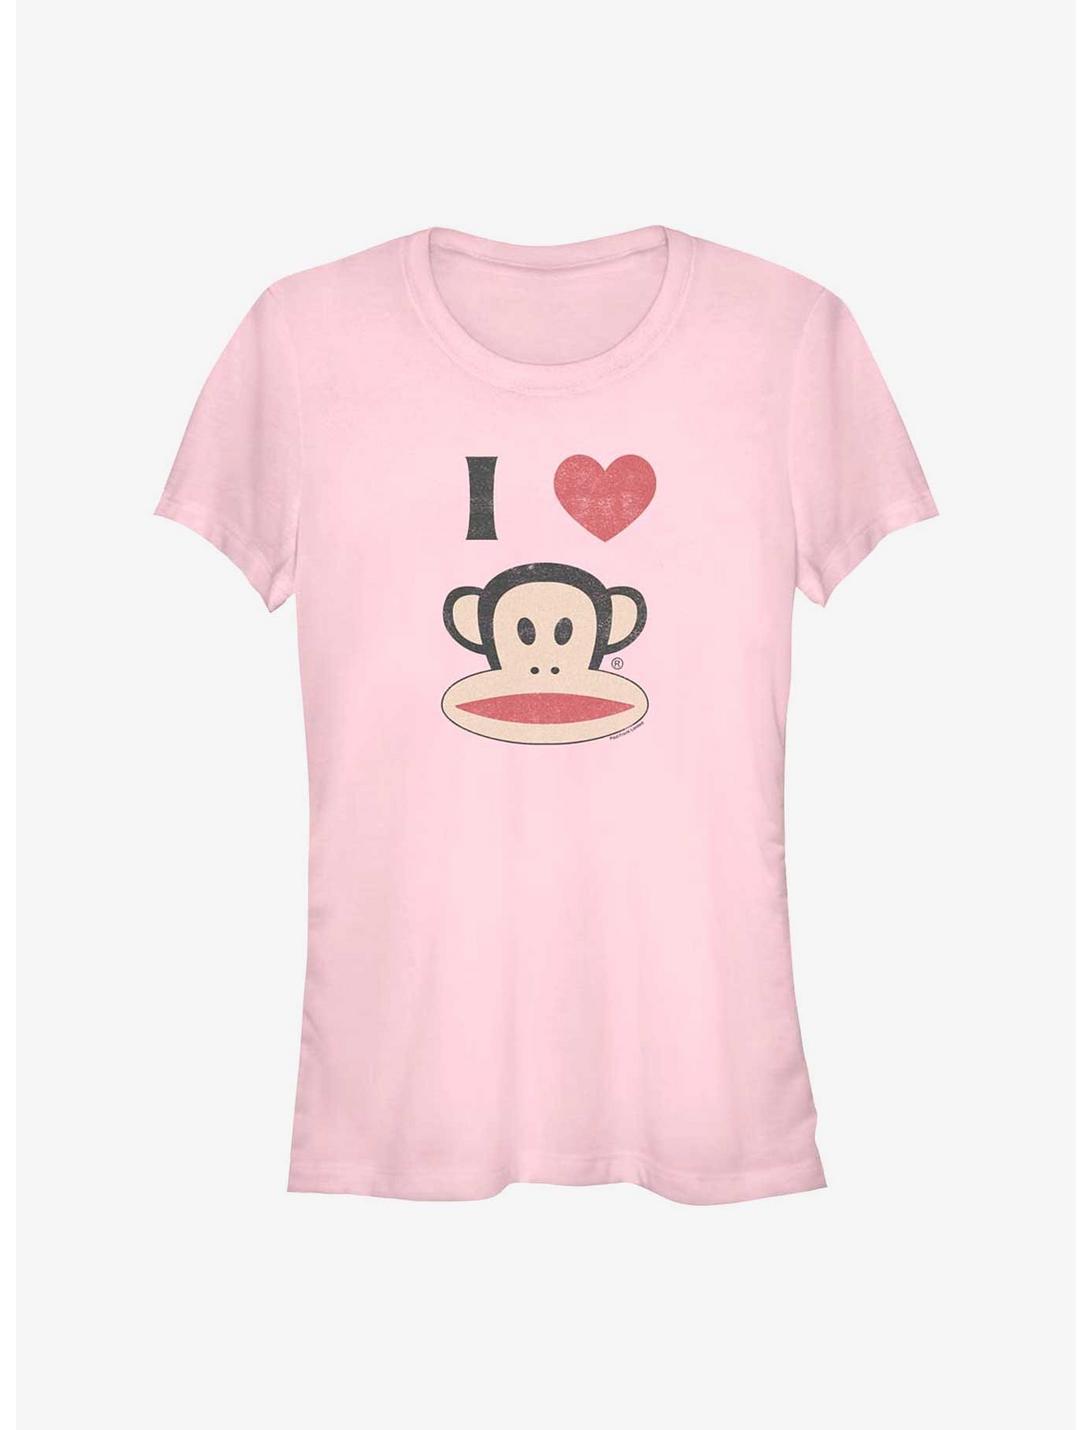 Paul Frank I Heart Monkey Girls T-Shirt, LIGHT PINK, hi-res